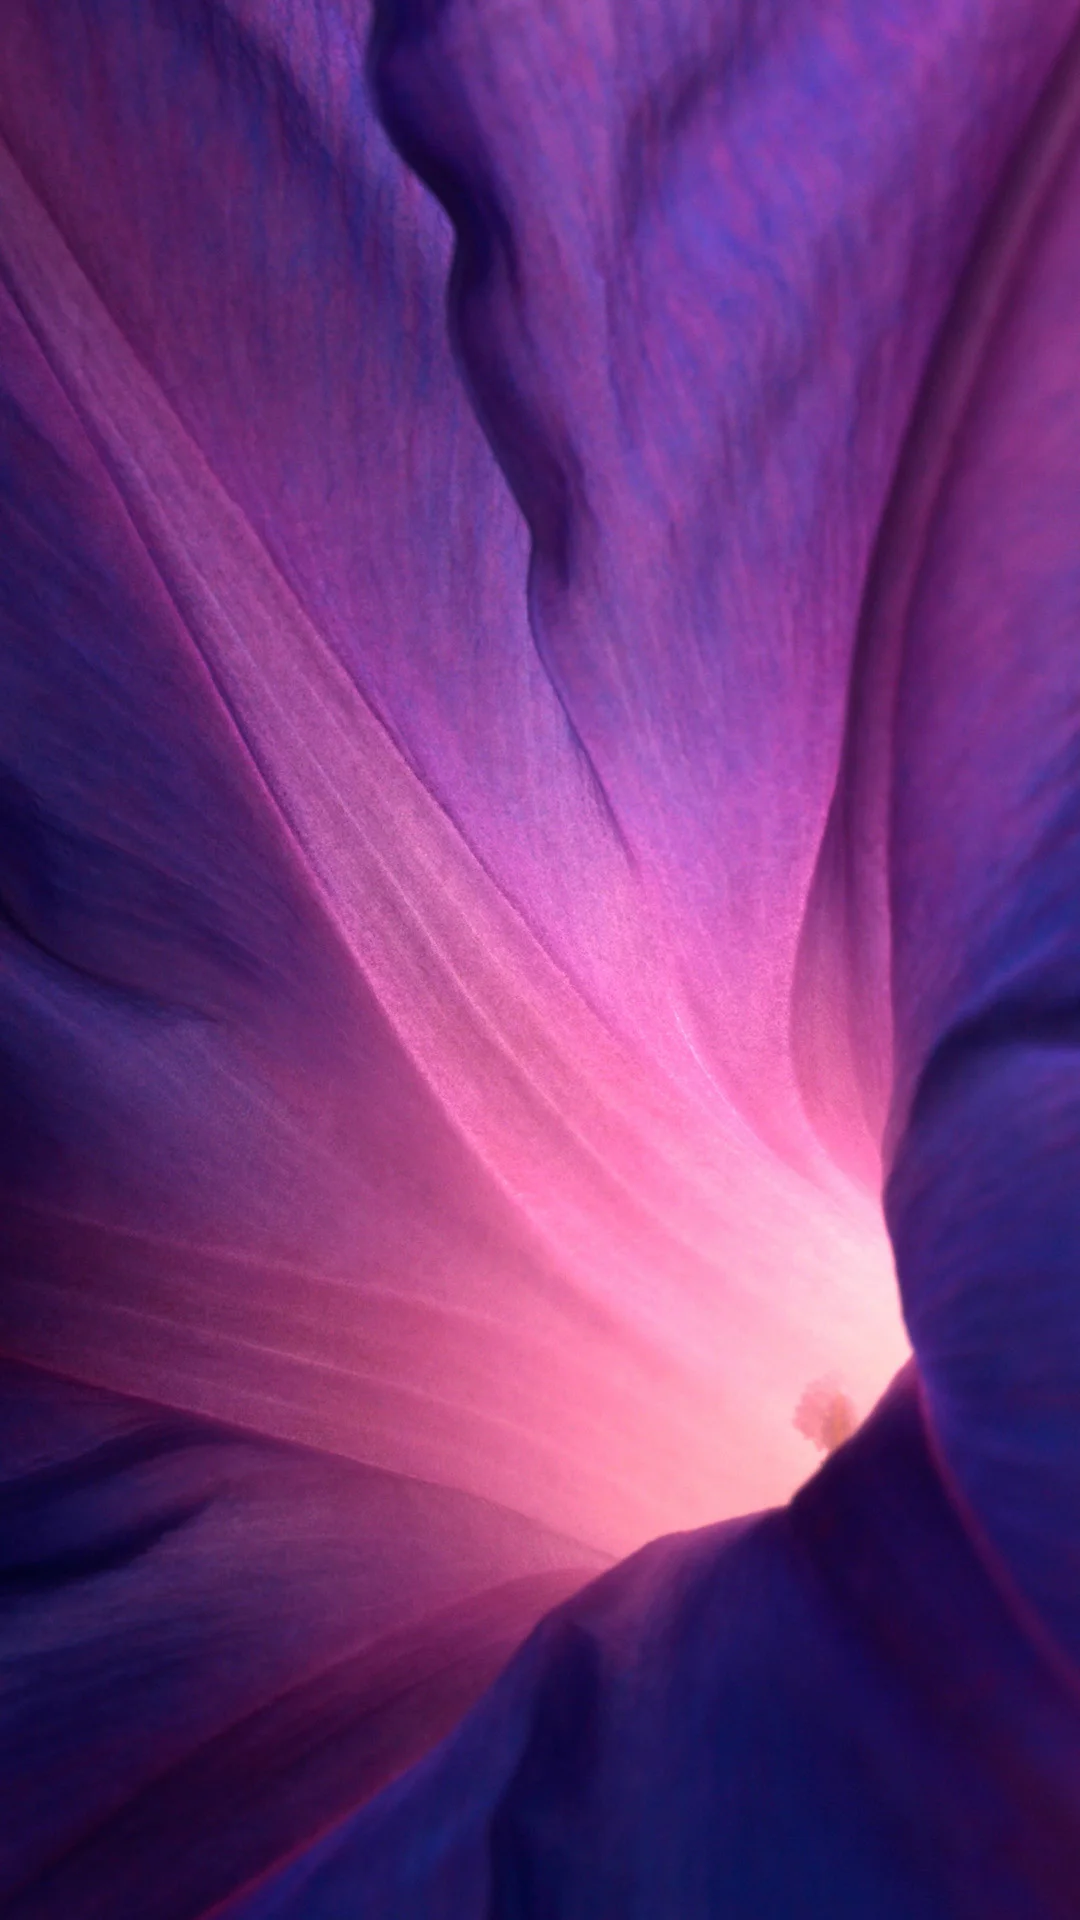 Abstract Purple Flower Lockscreen iPhone 6 Wallpaper Download | iPhone .